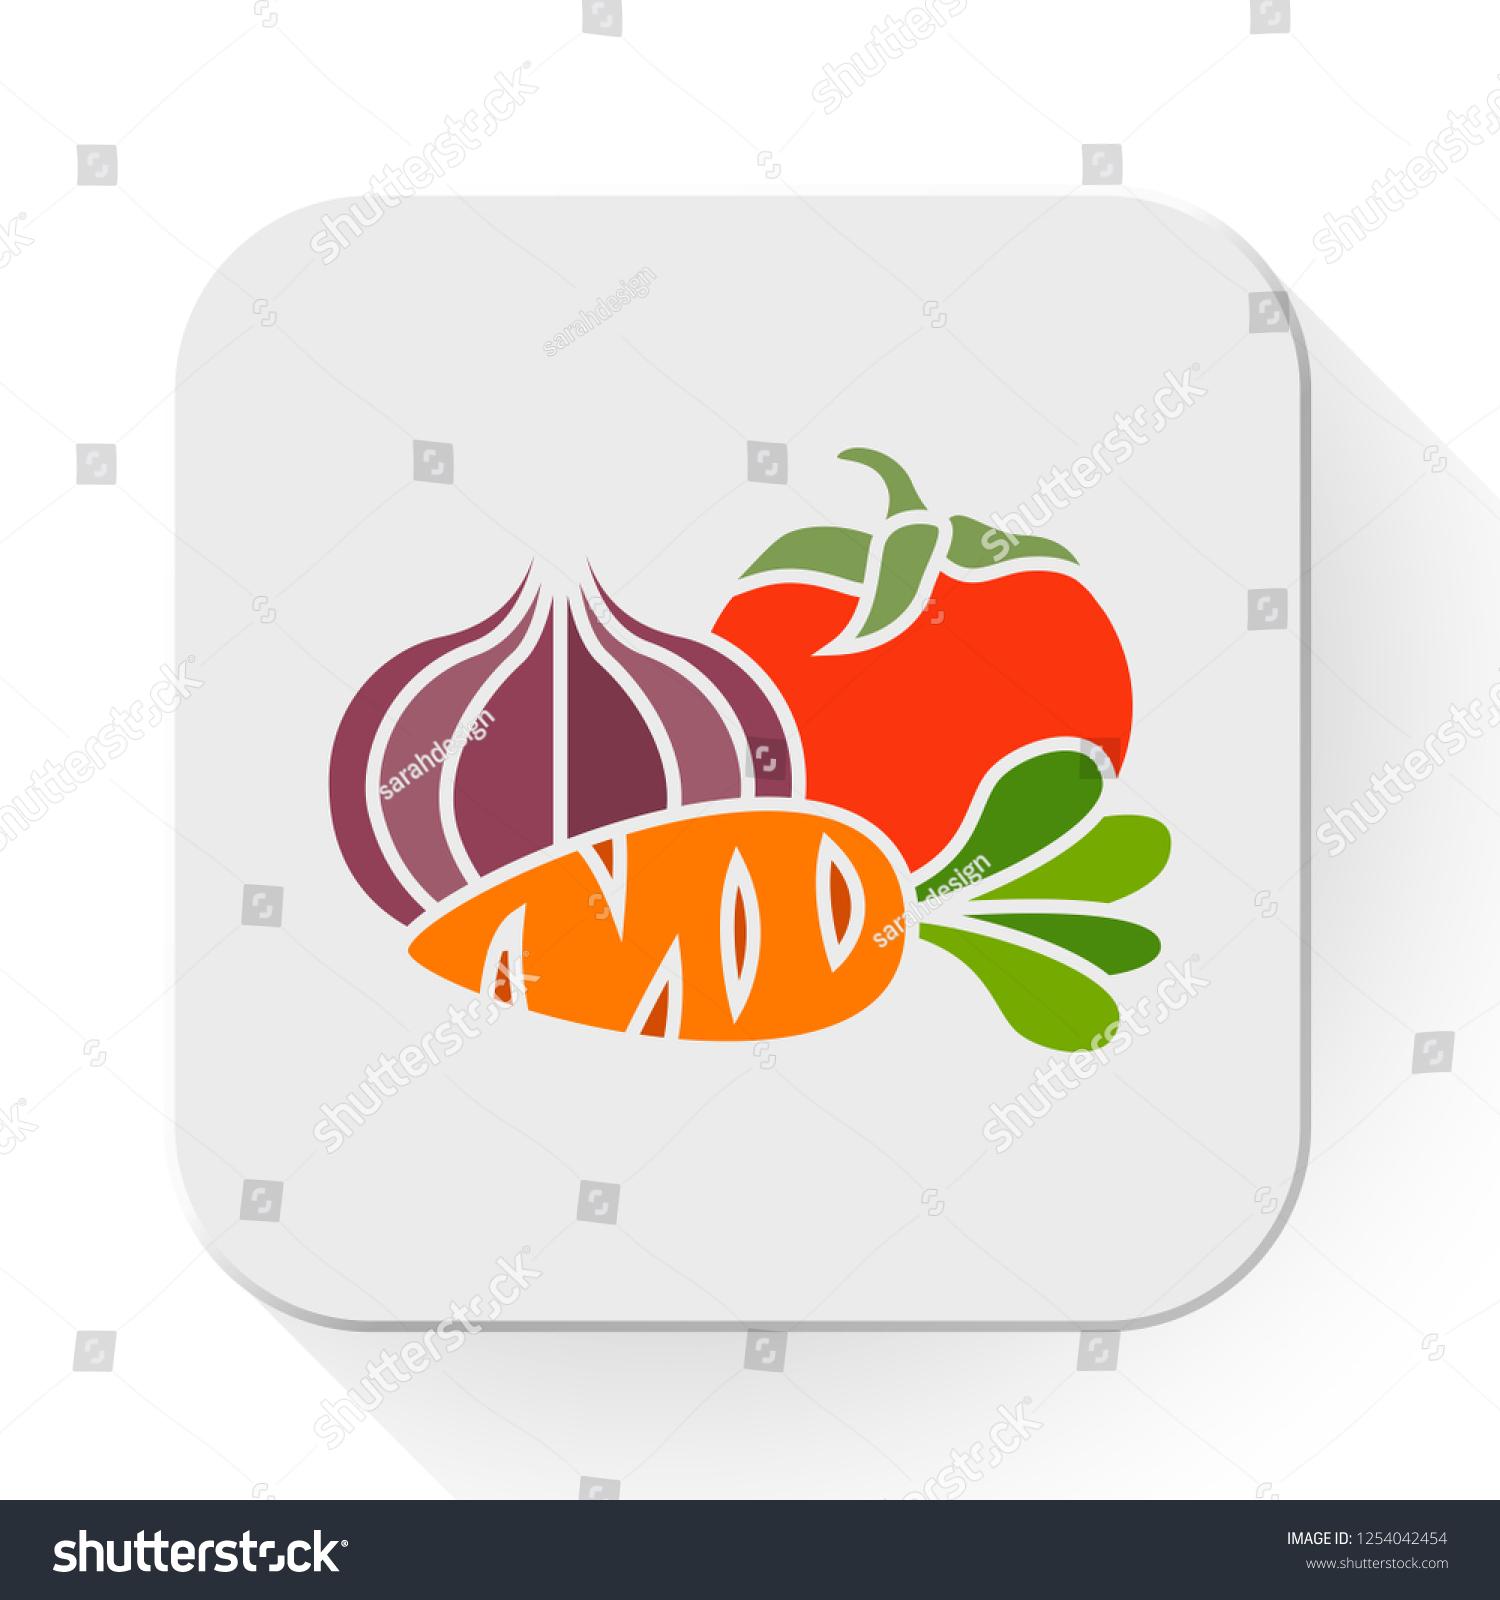 vector vegetables icon. Flat illustration of vegetables. vegetables isolated on white background. vegetables sign symbol  #1254042454